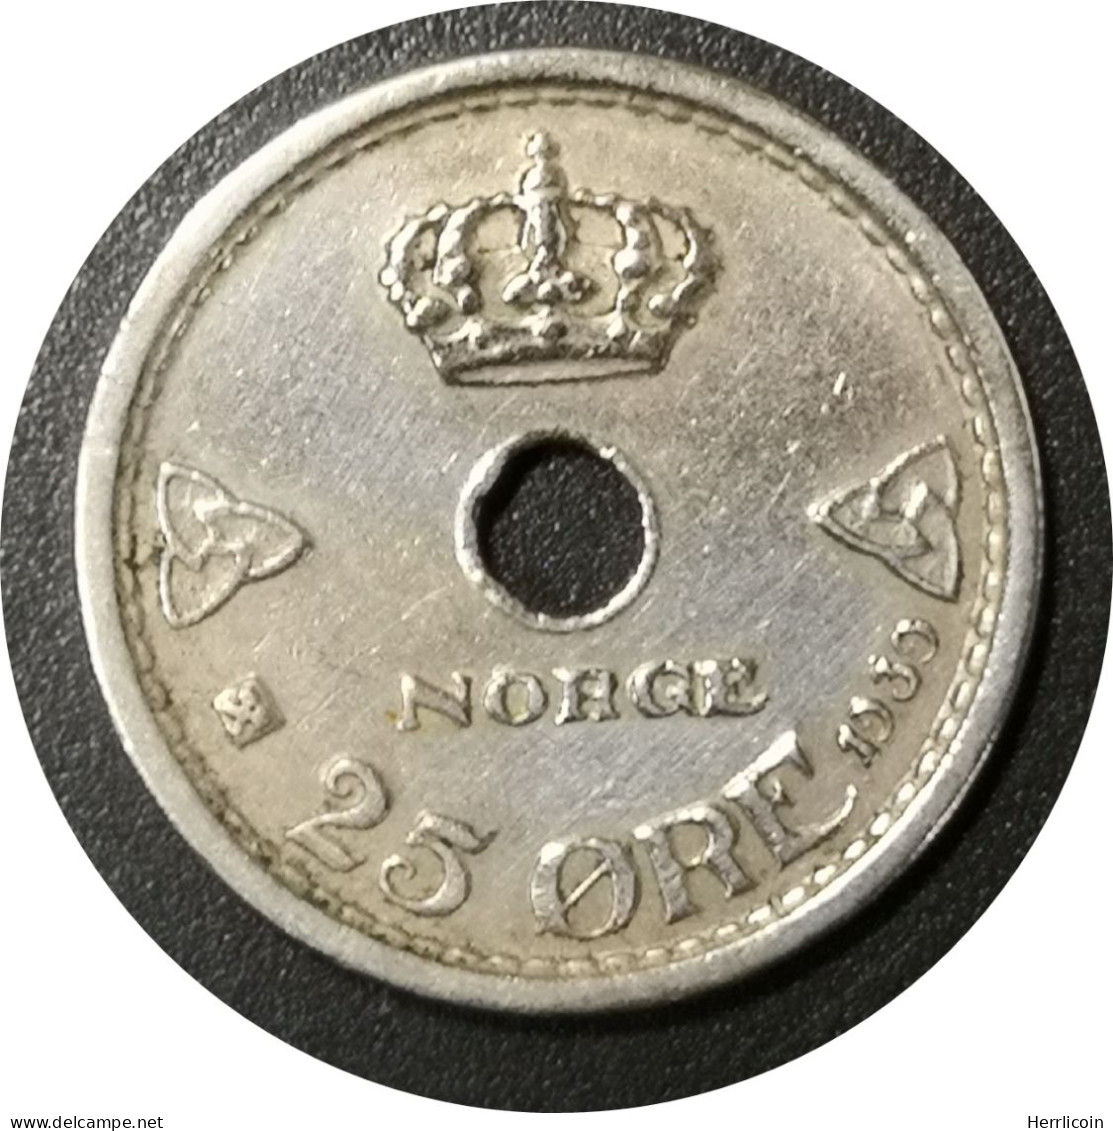 Monnaie Norvège - 1939 - 25 øre - Haakon VII - Norway